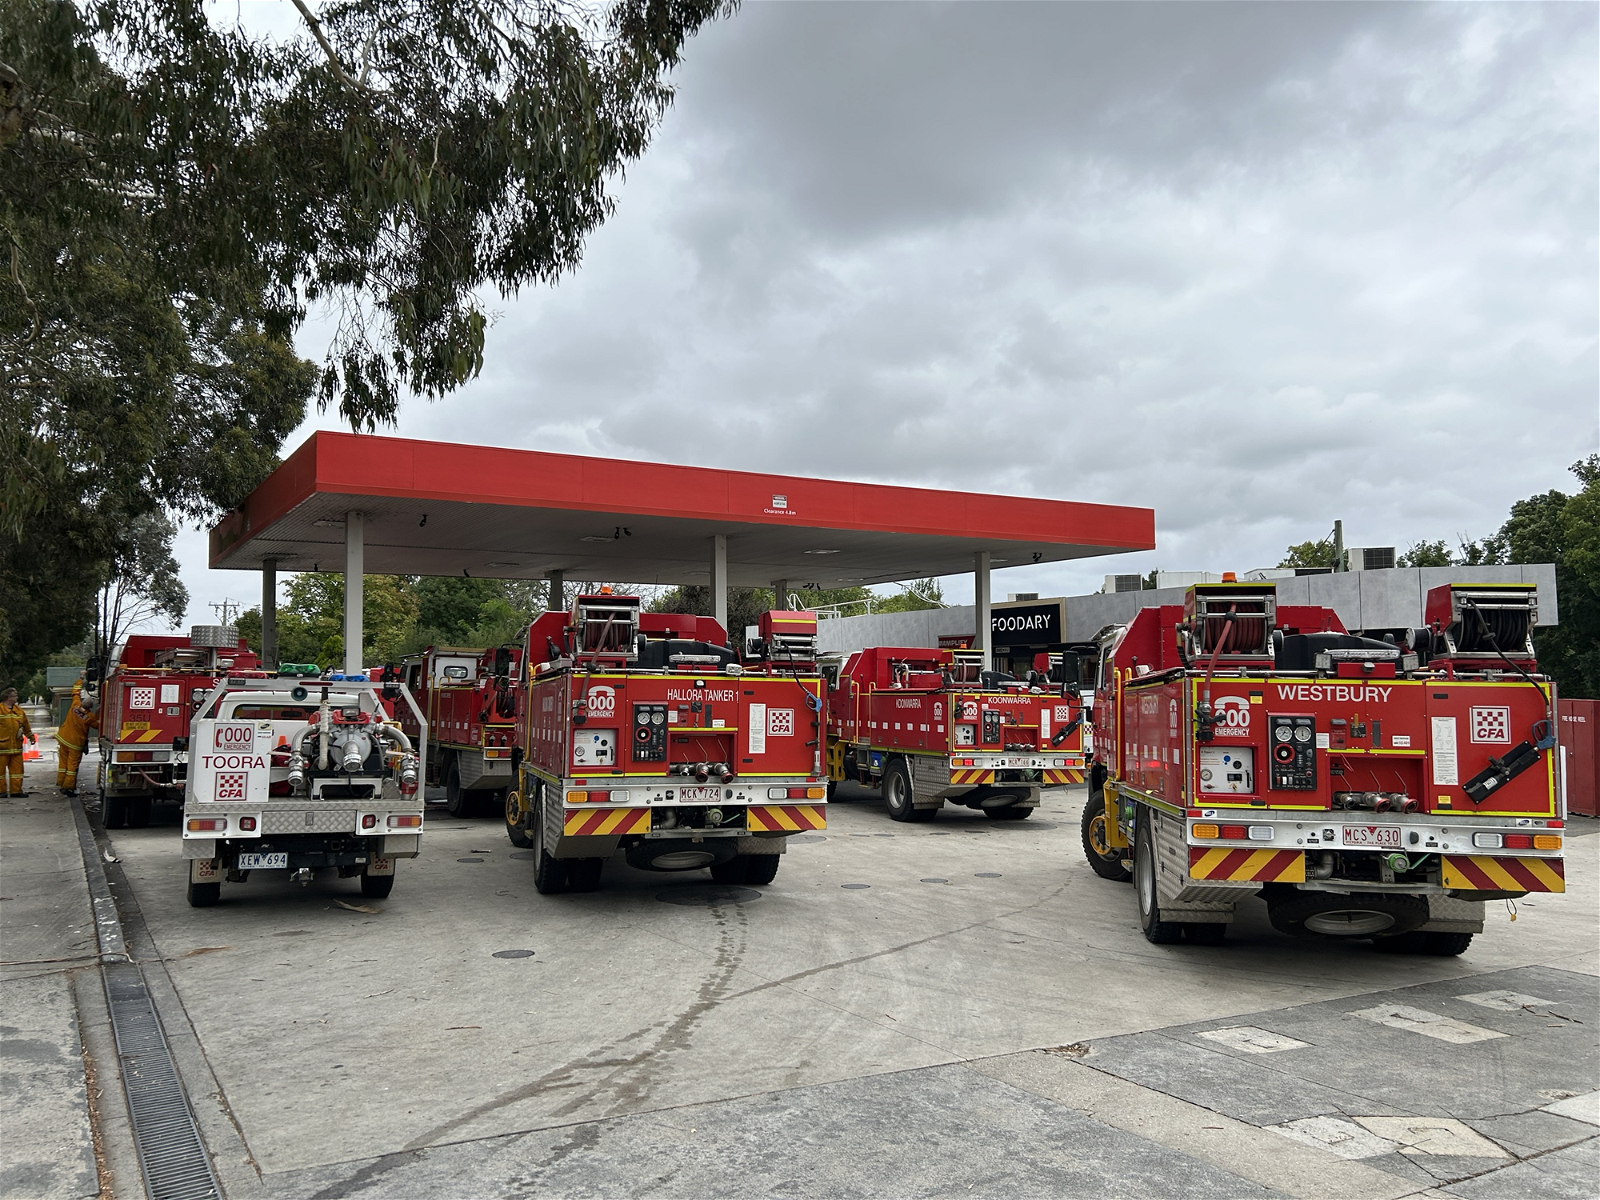 Several fire trucks at a petrol station.